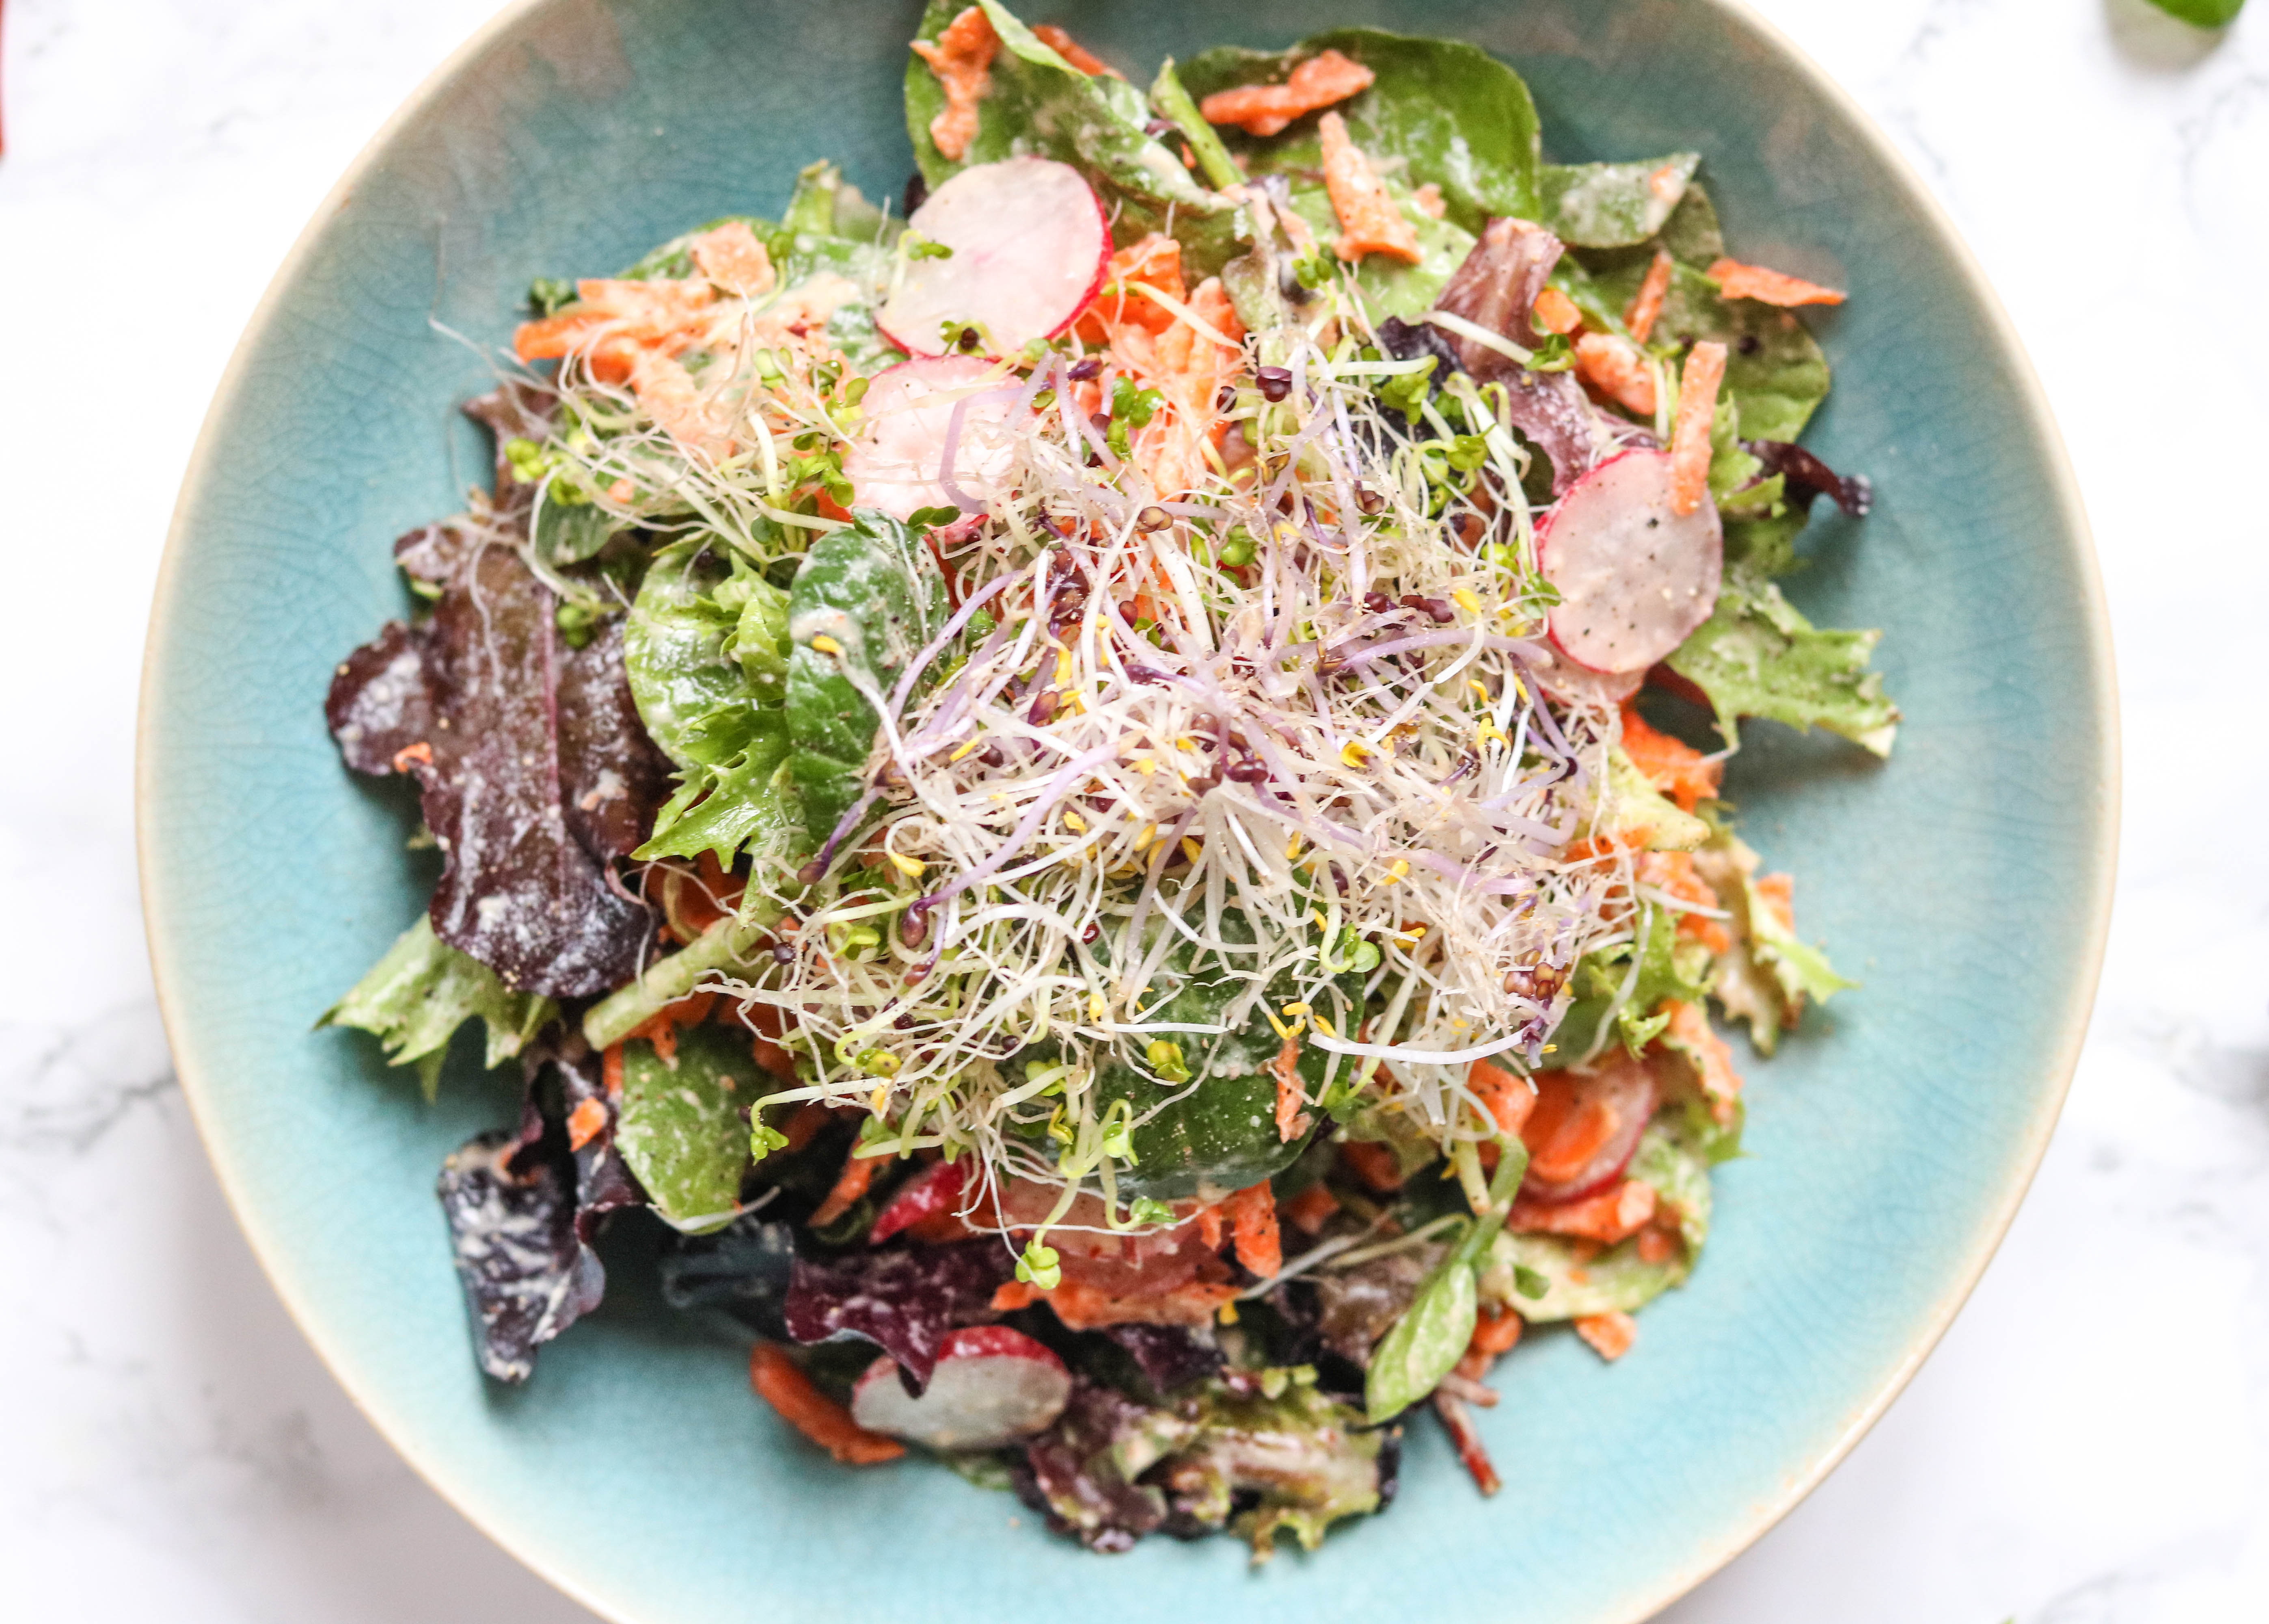 Superfood Tahini Salad recipe courtesy of That Green Lyfe